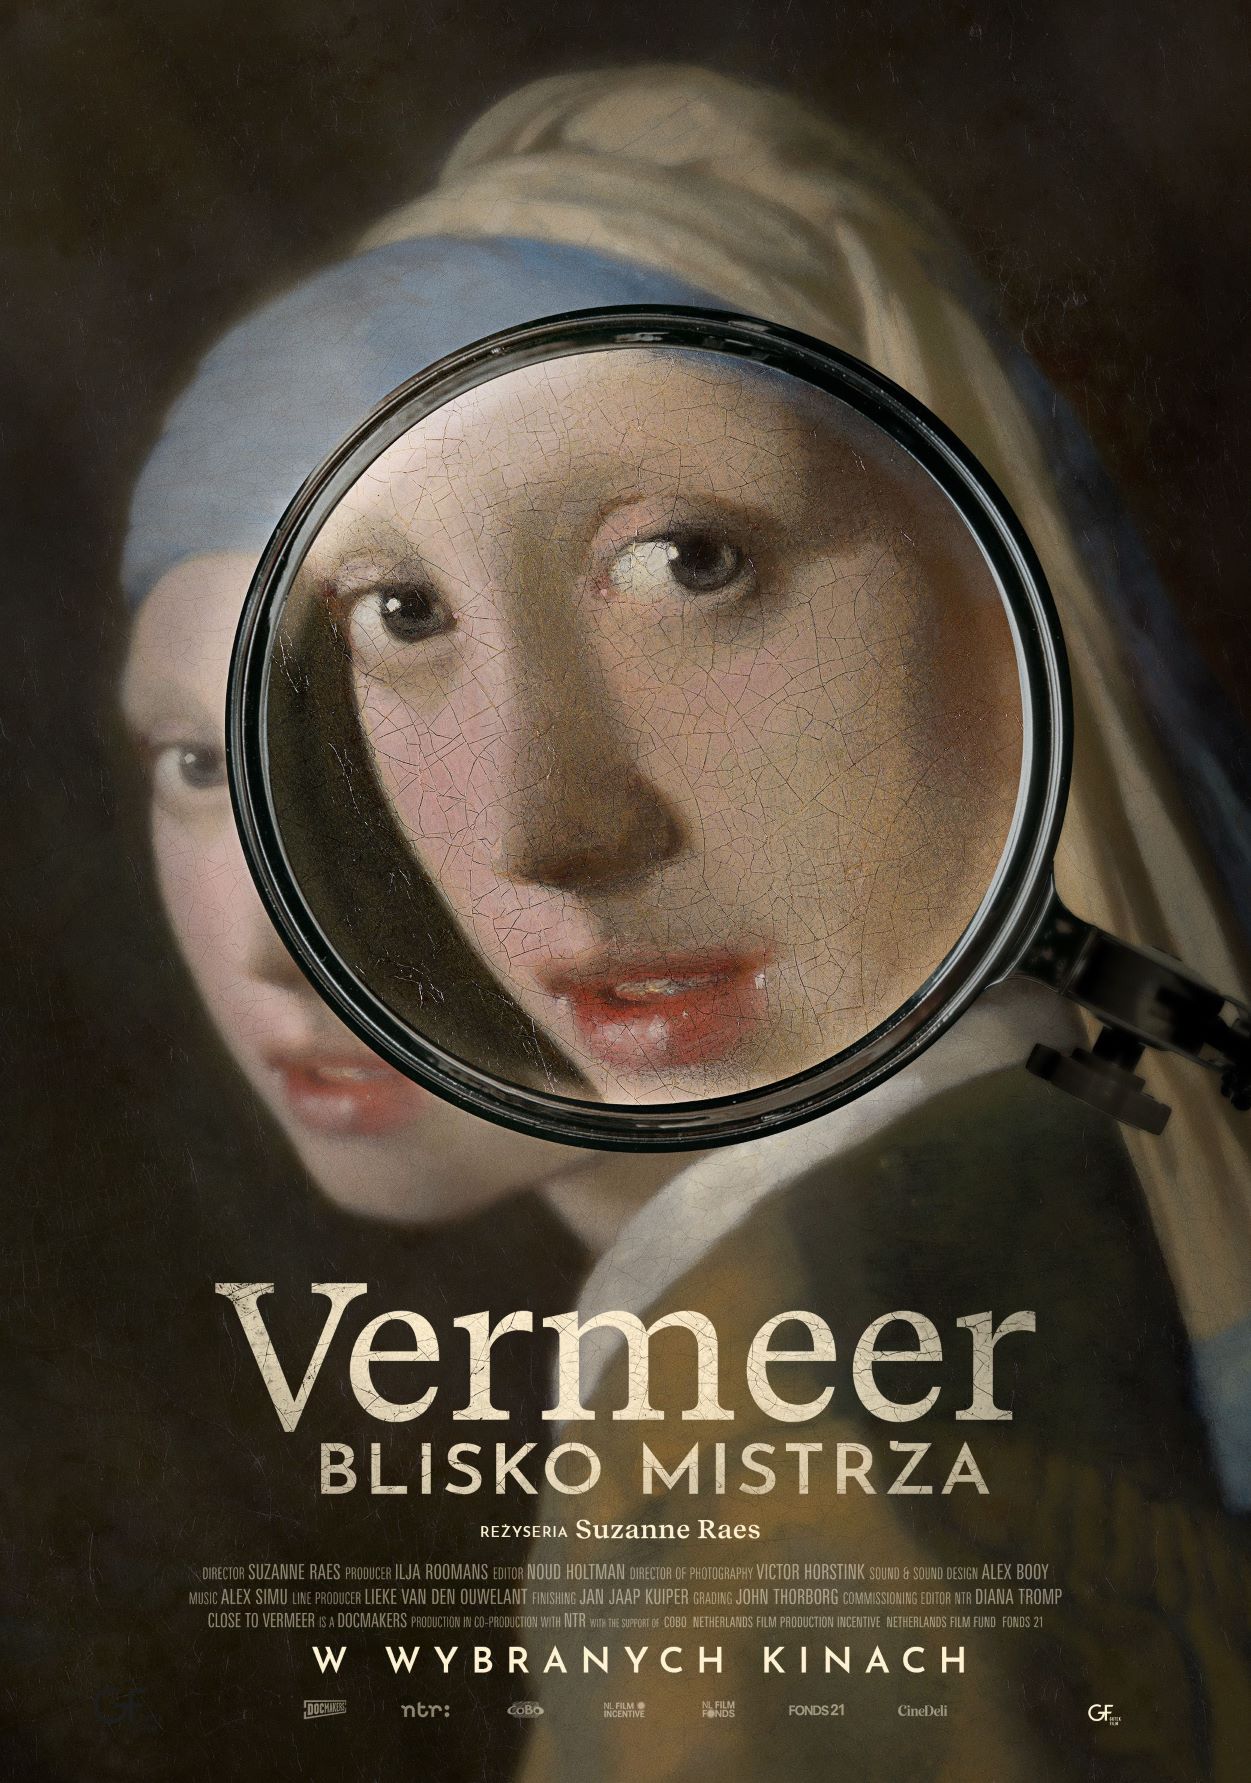 Plakat Vermeer. Blisko mistrza 176508